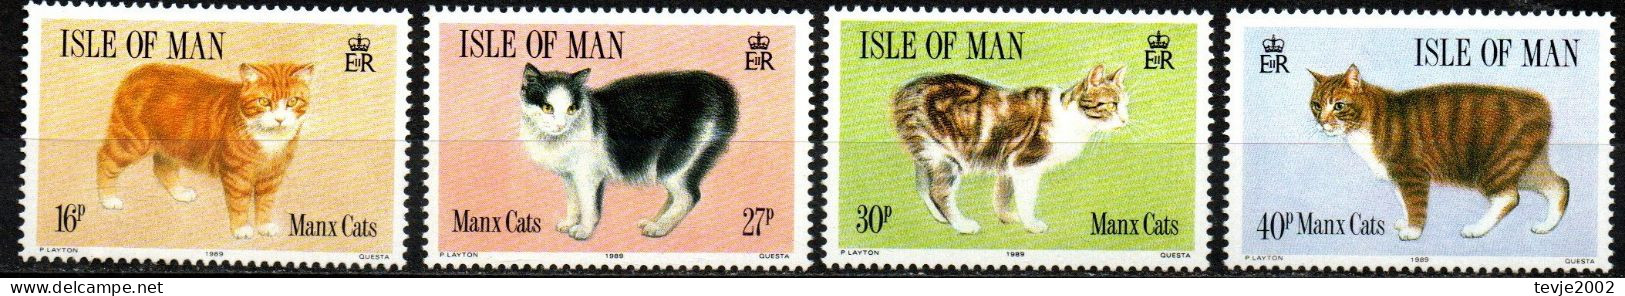 Isle Of Man 1989 - Mi.Nr. 383 - 389 - Postfrisch MNH - Tiere Animals Katzen Cats - Chats Domestiques